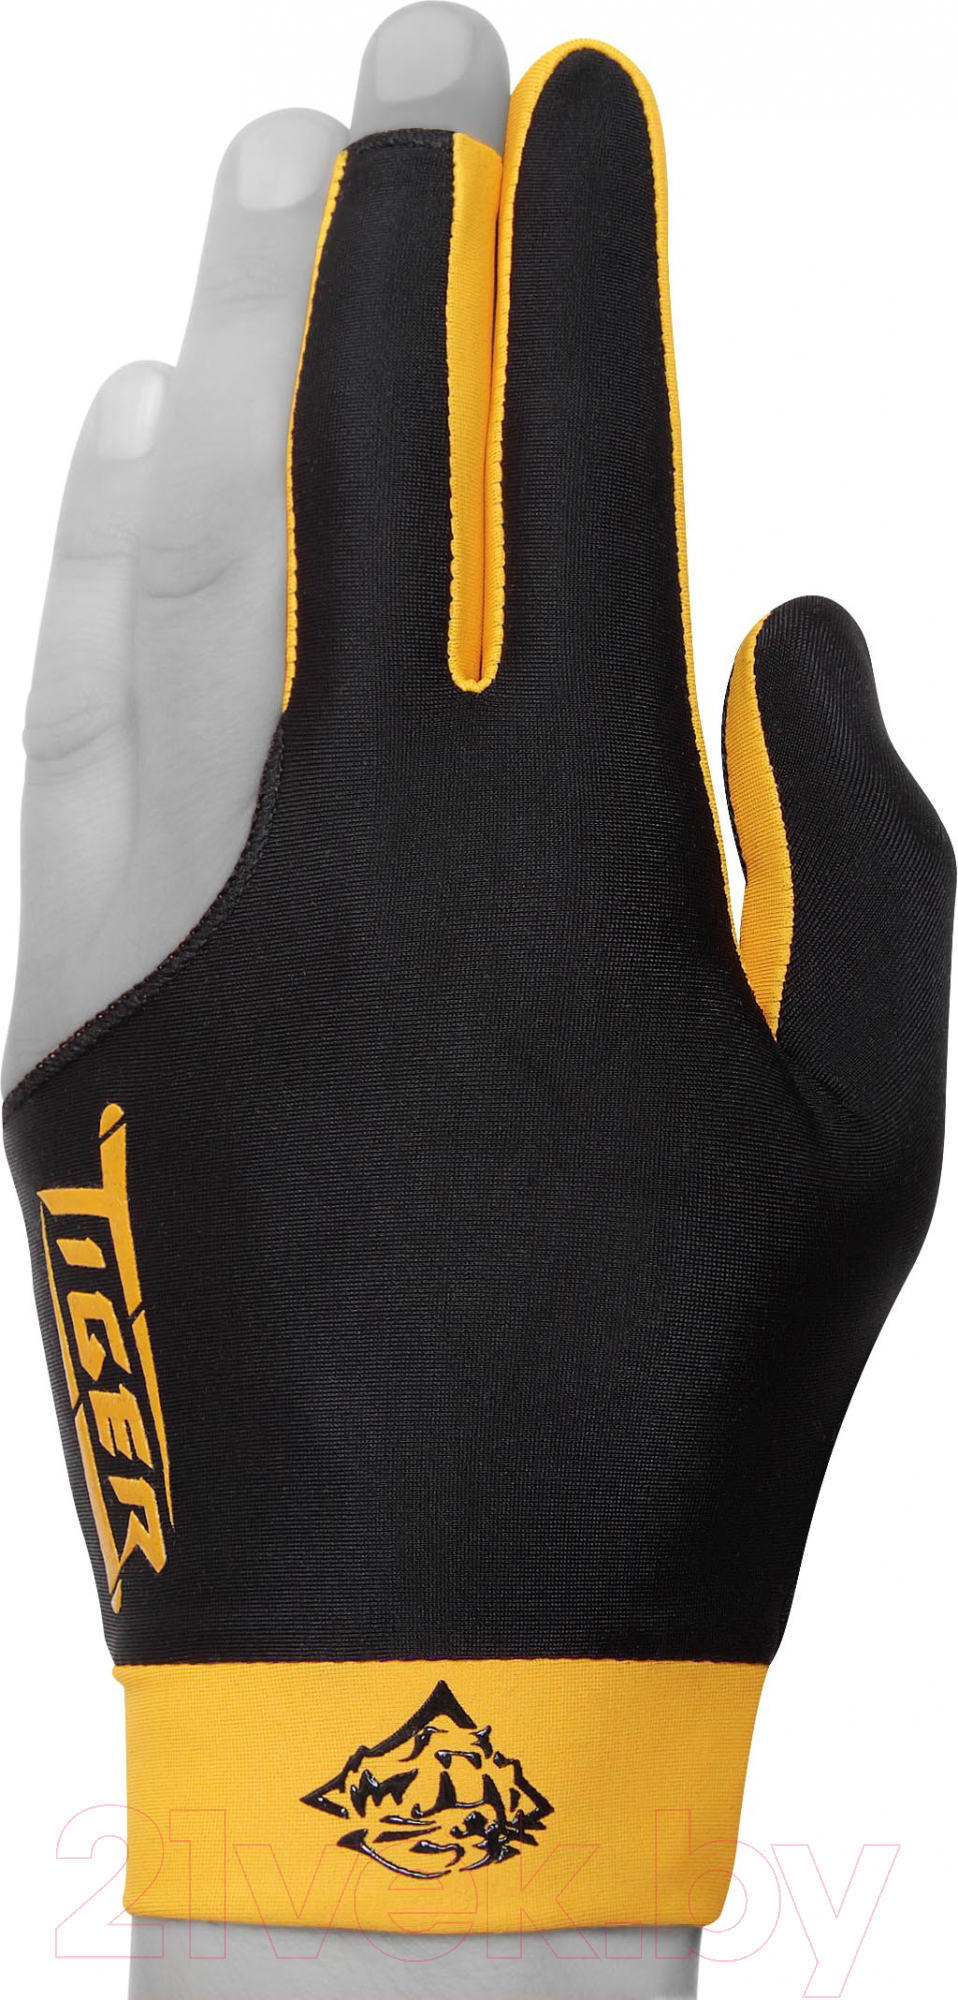 Перчатка для бильярда Tiger Professional Billiard Glove / 10694